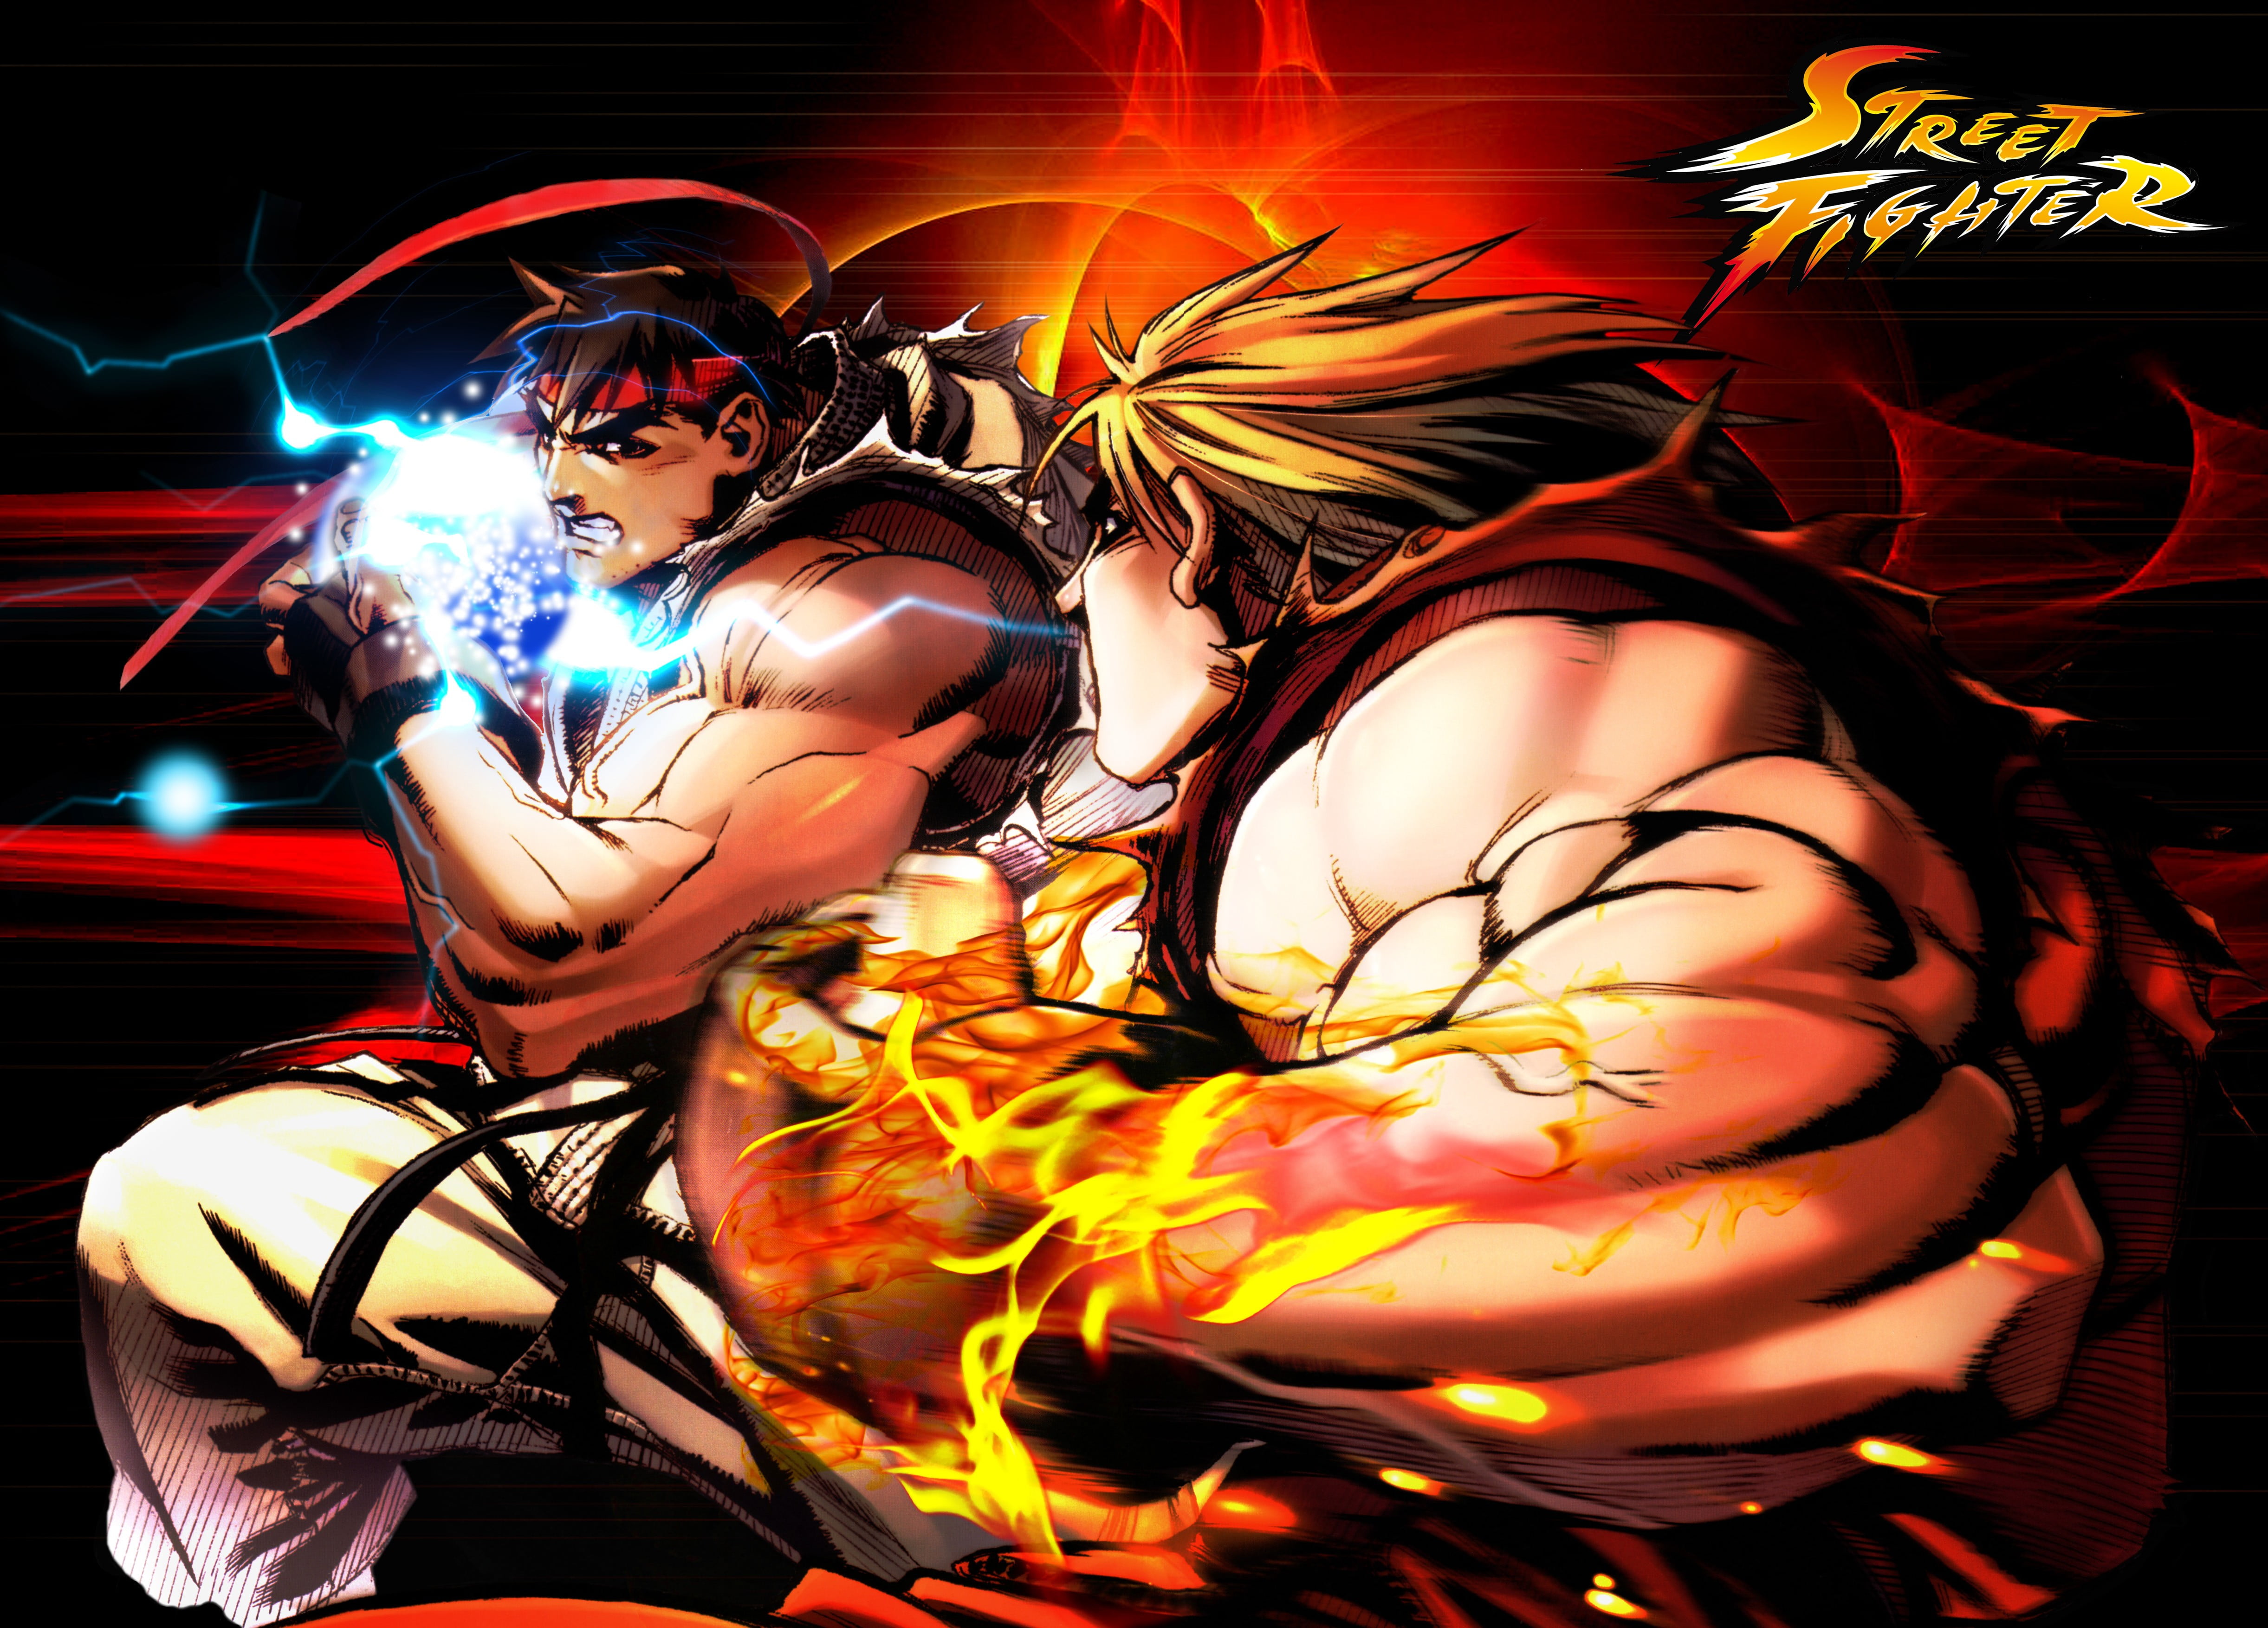 Street Fighter Ryu and Ken digital wallpaper, Street Fighter, Ryu (Street Fighter), Ken (Street Fighter), video games